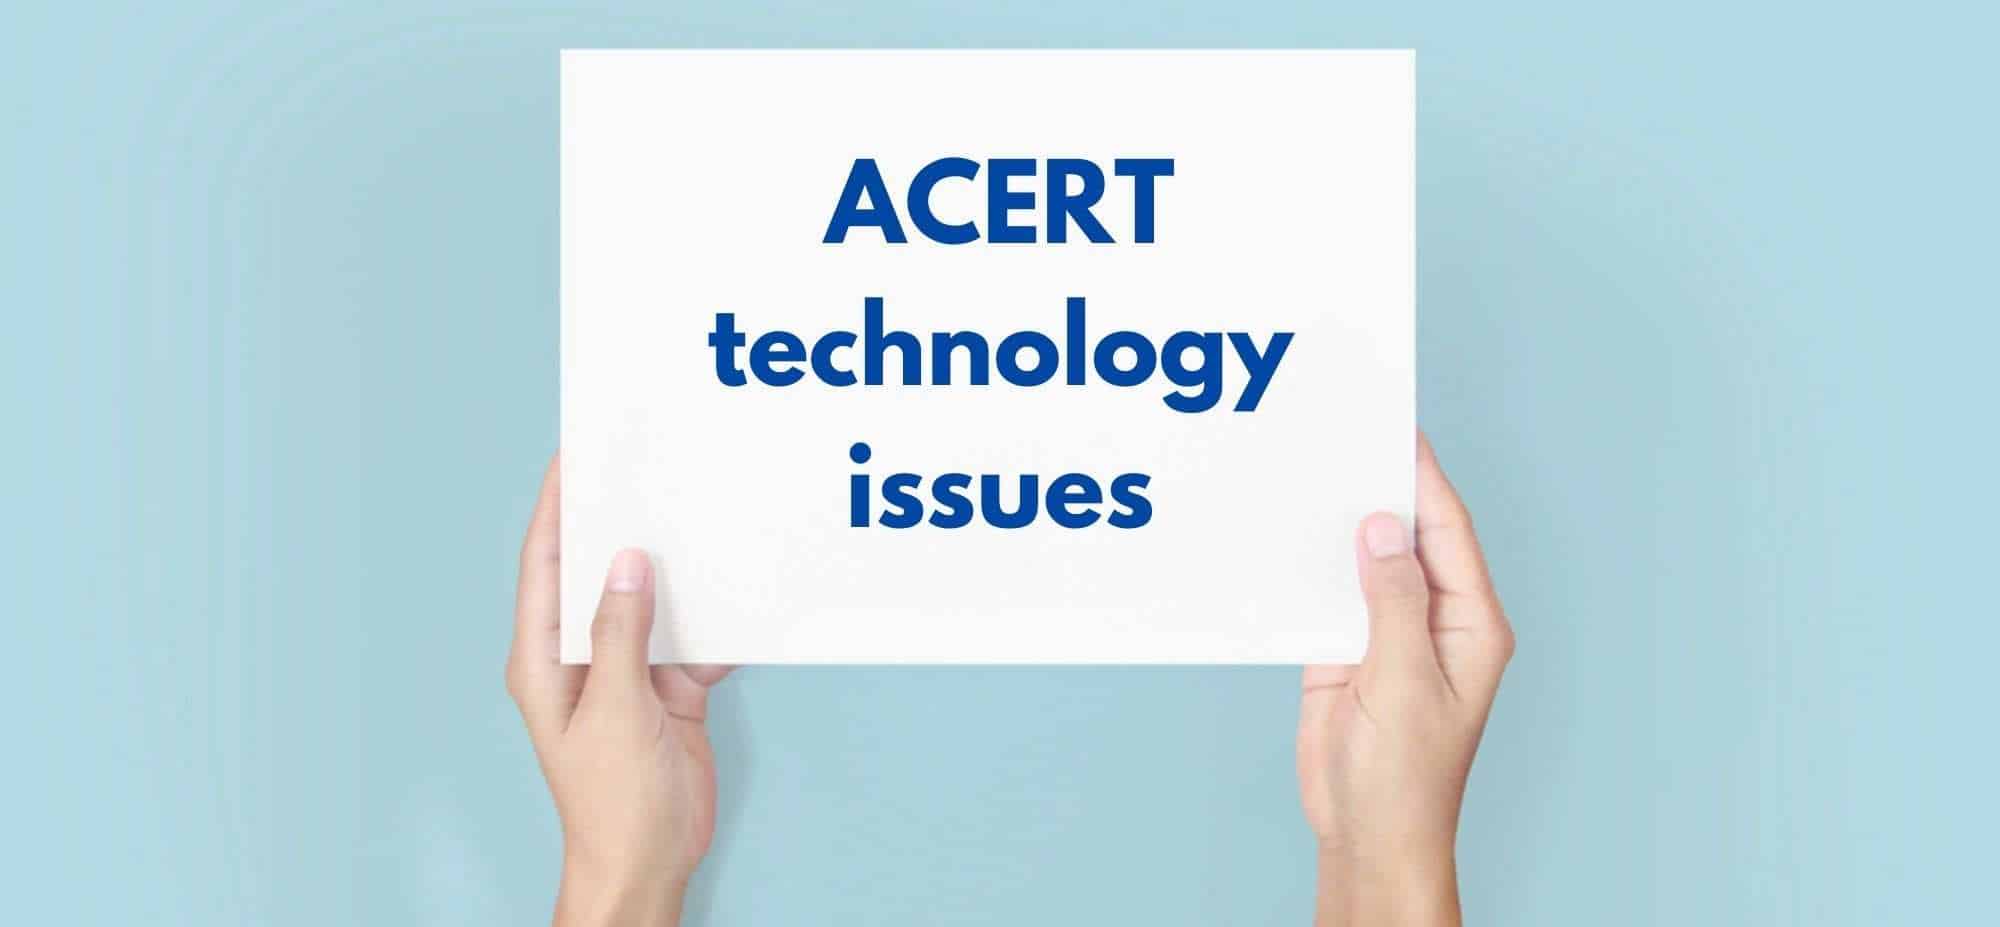 ACERT technology issues